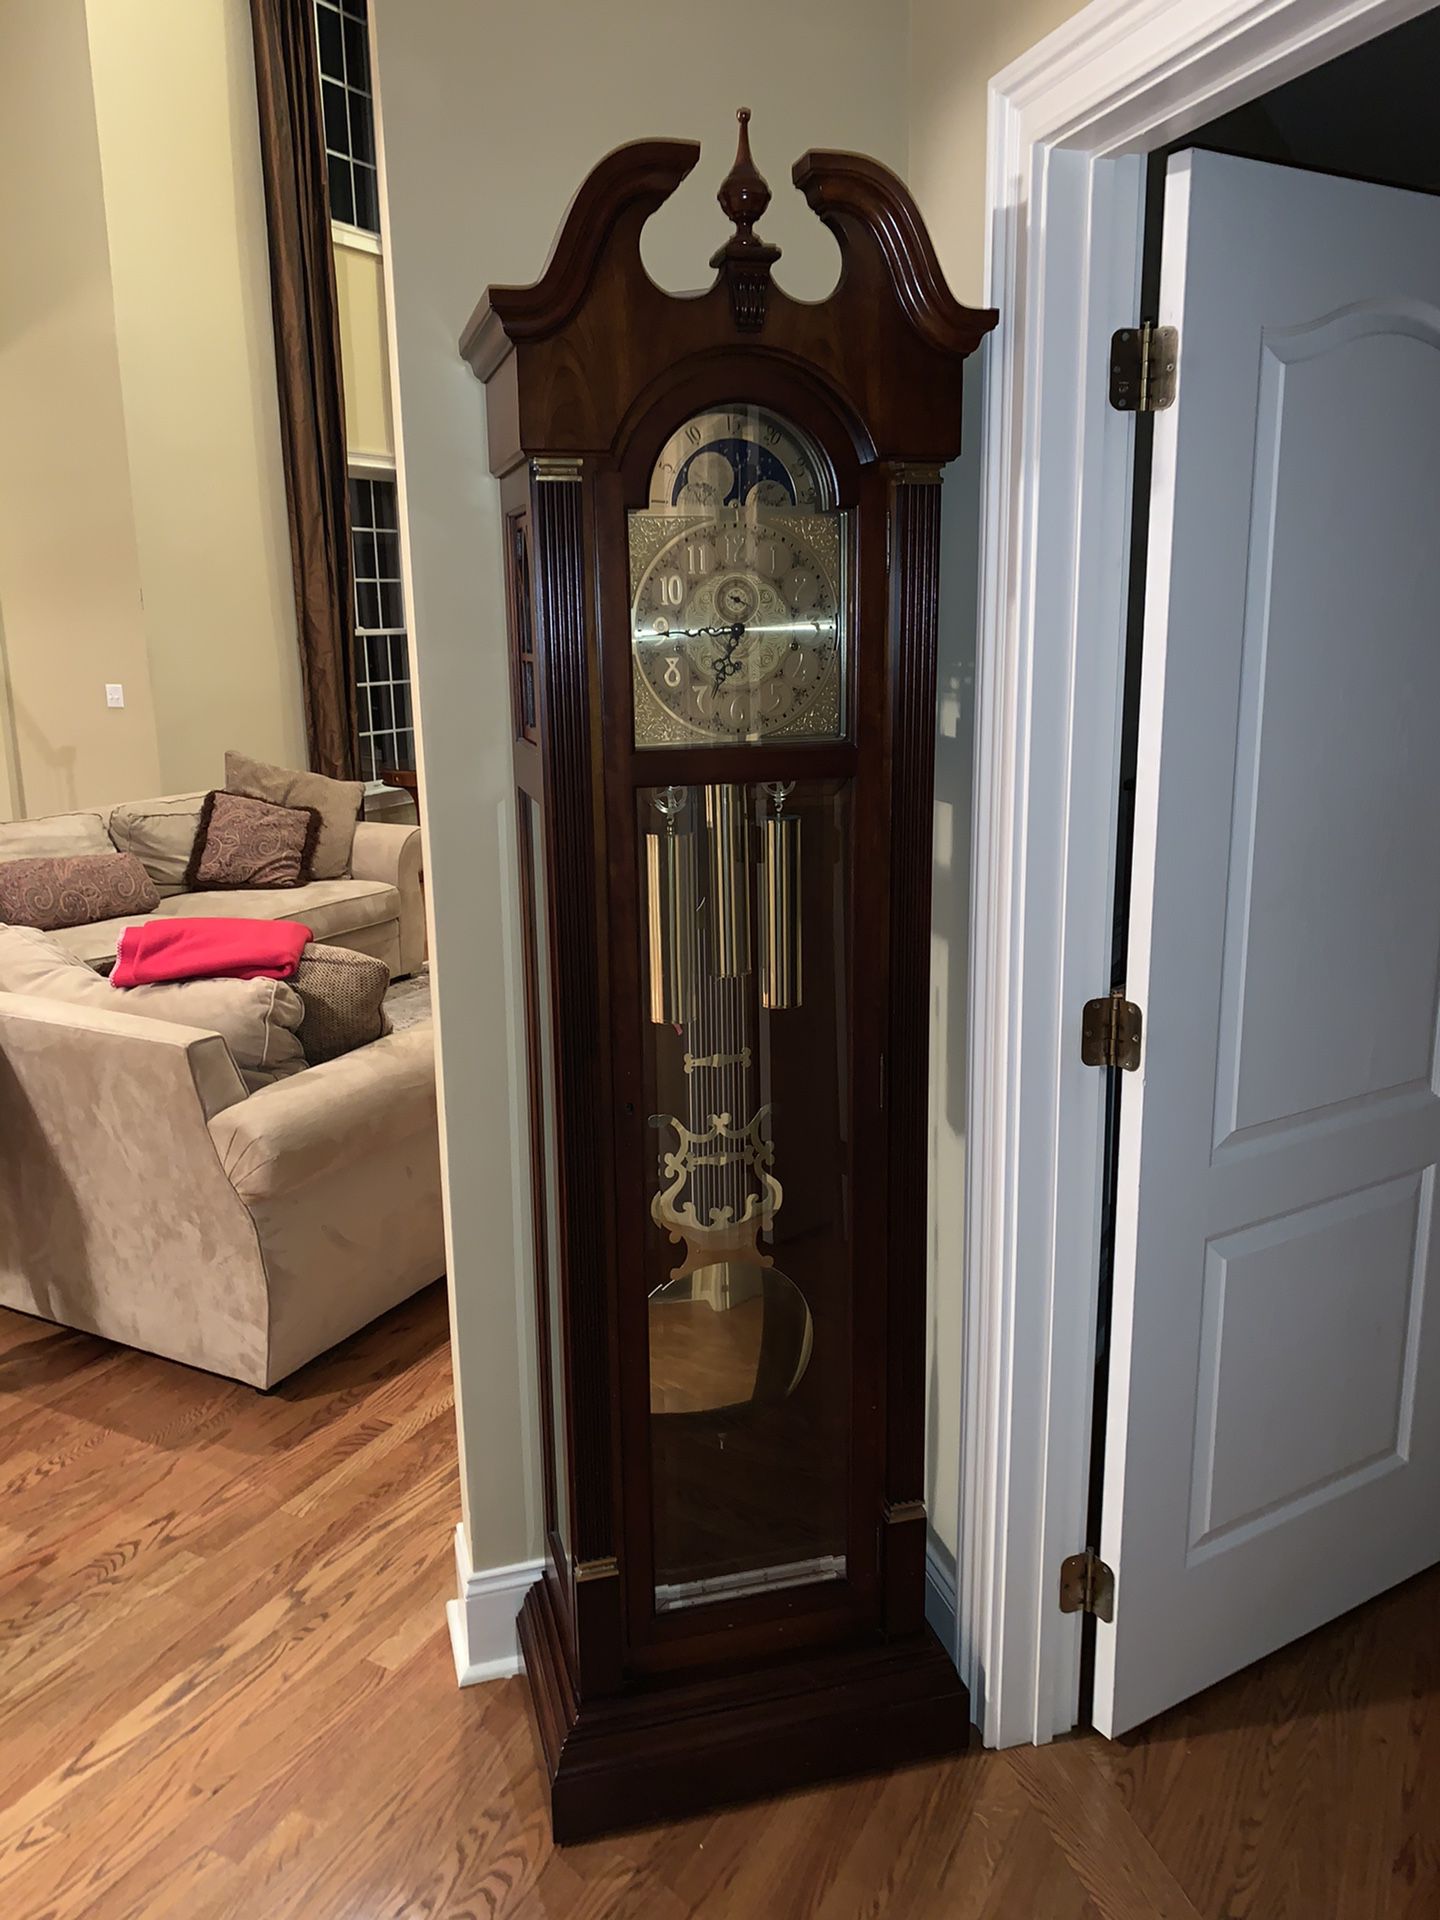 Antique grandfather clock Ethan Allen